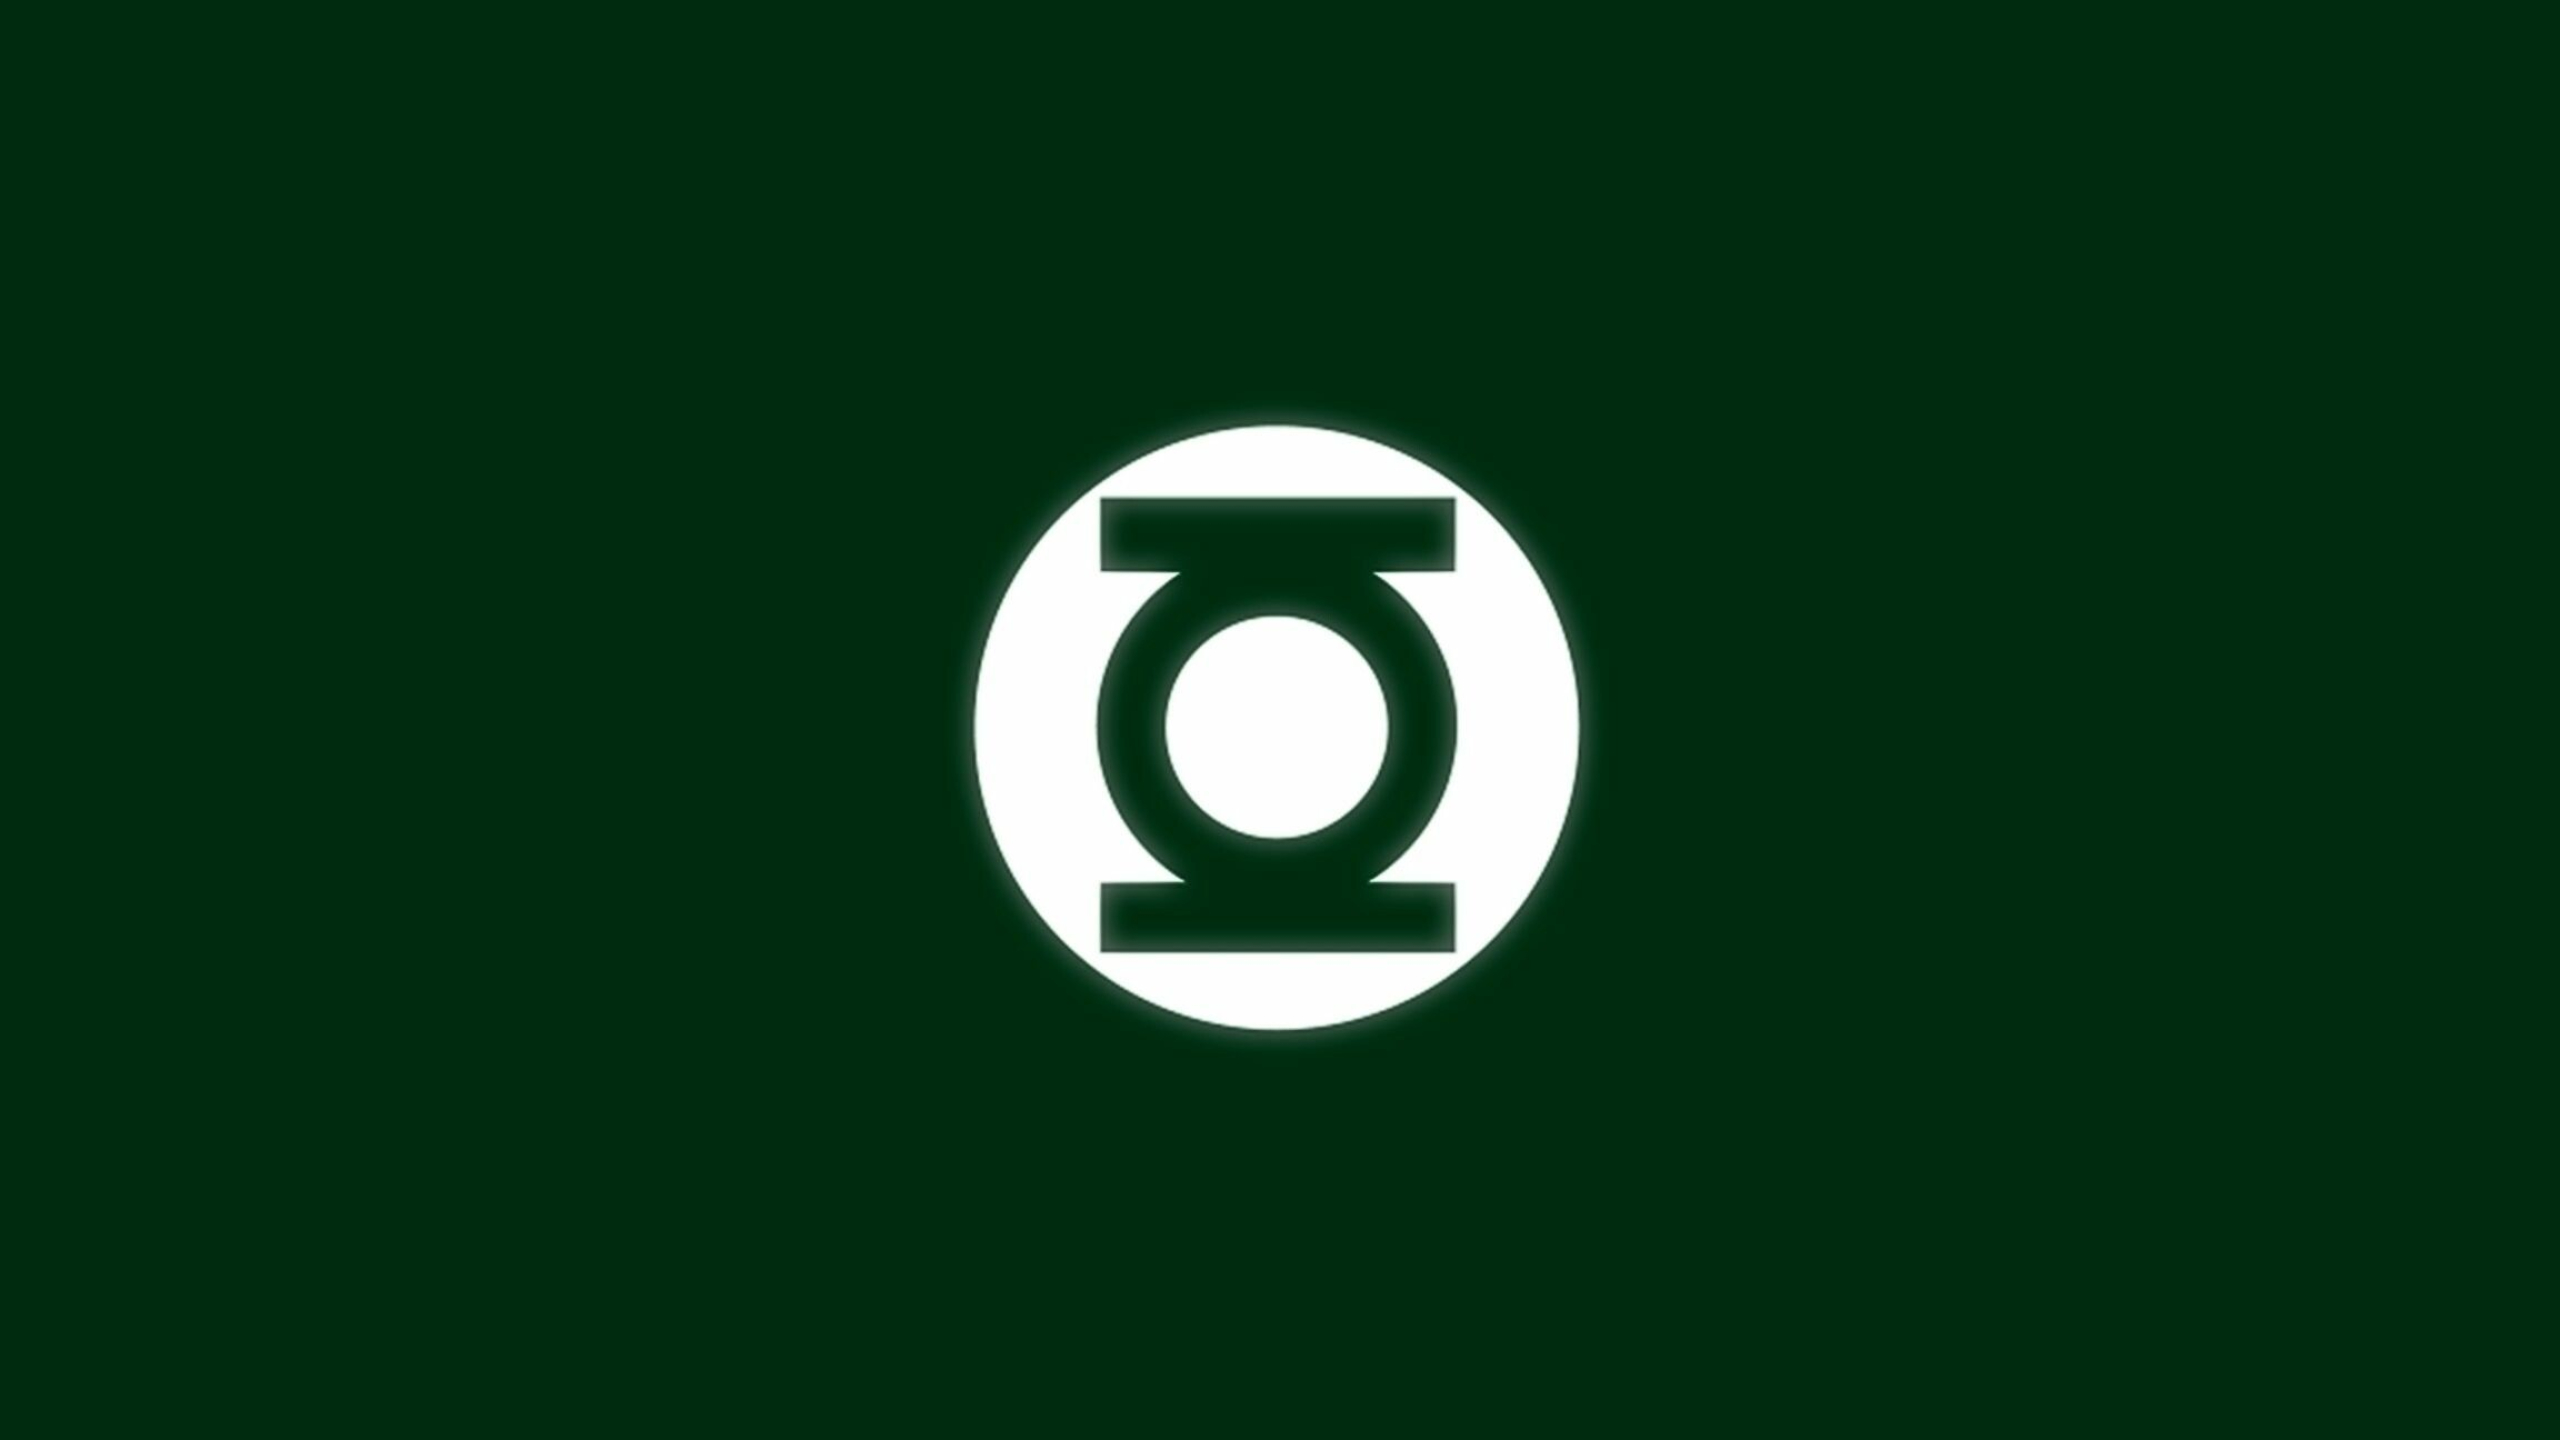 Green Lantern: An intergalactic peacekeeping force, Logo. 2560x1440 HD Background.